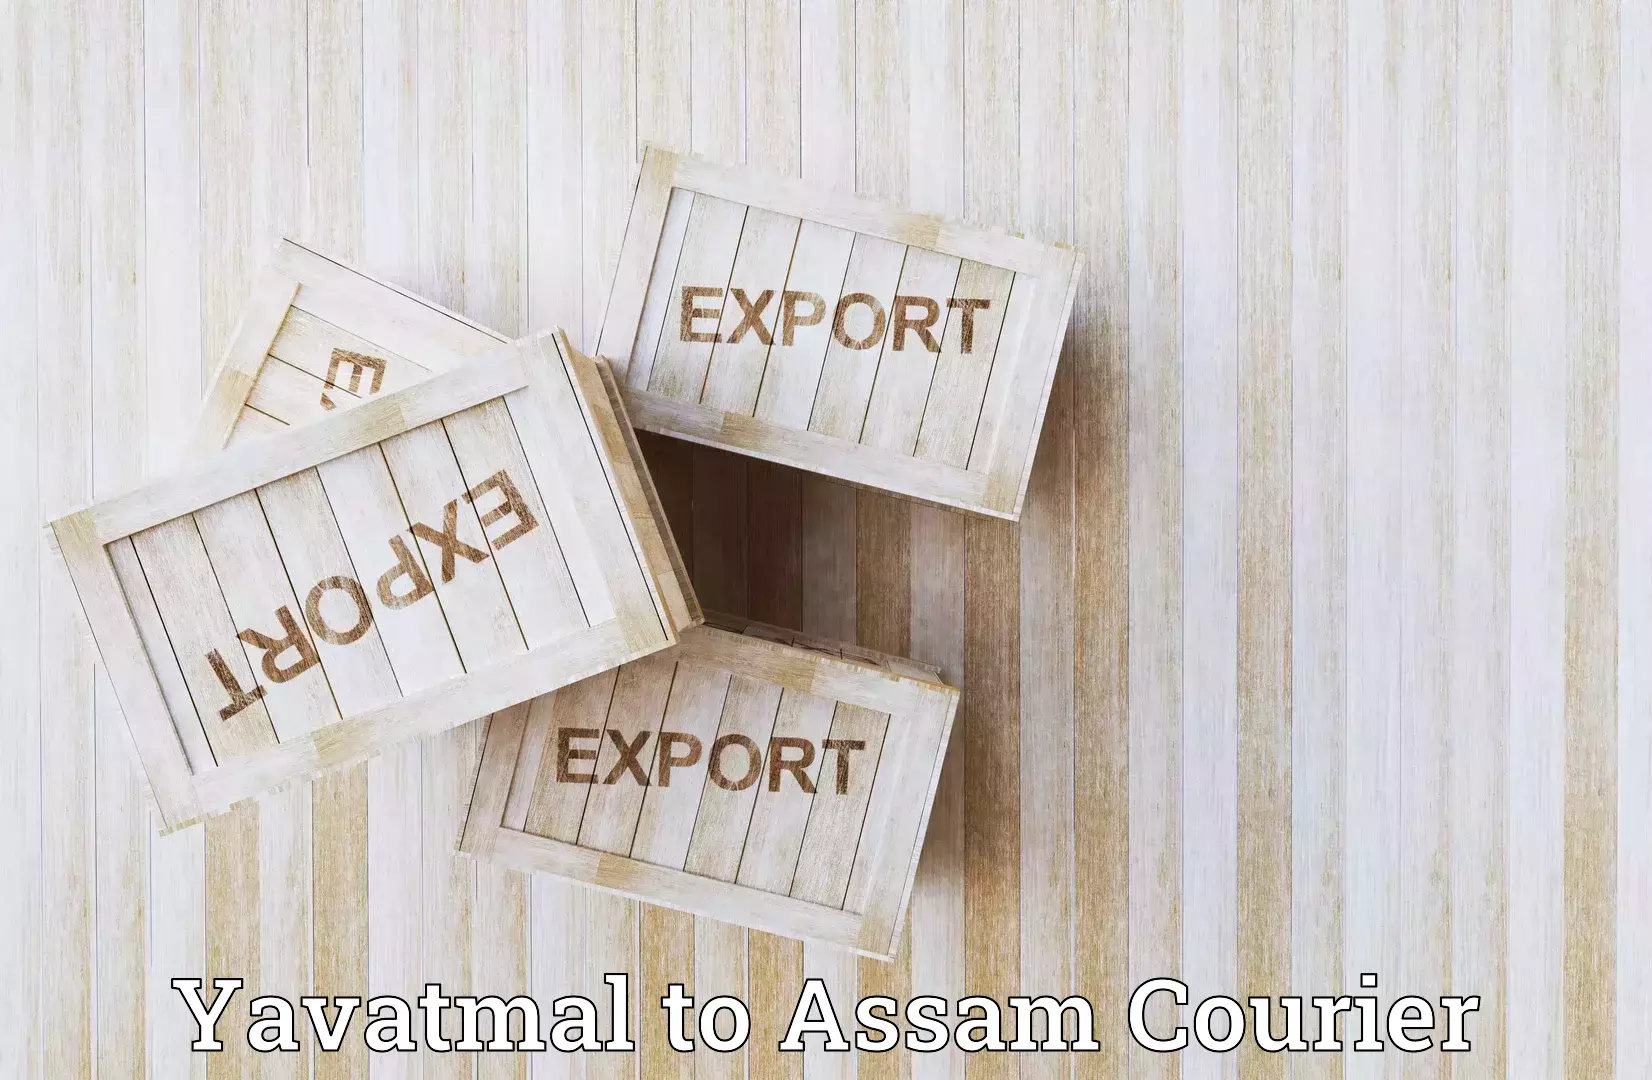 Efficient order fulfillment in Yavatmal to Assam